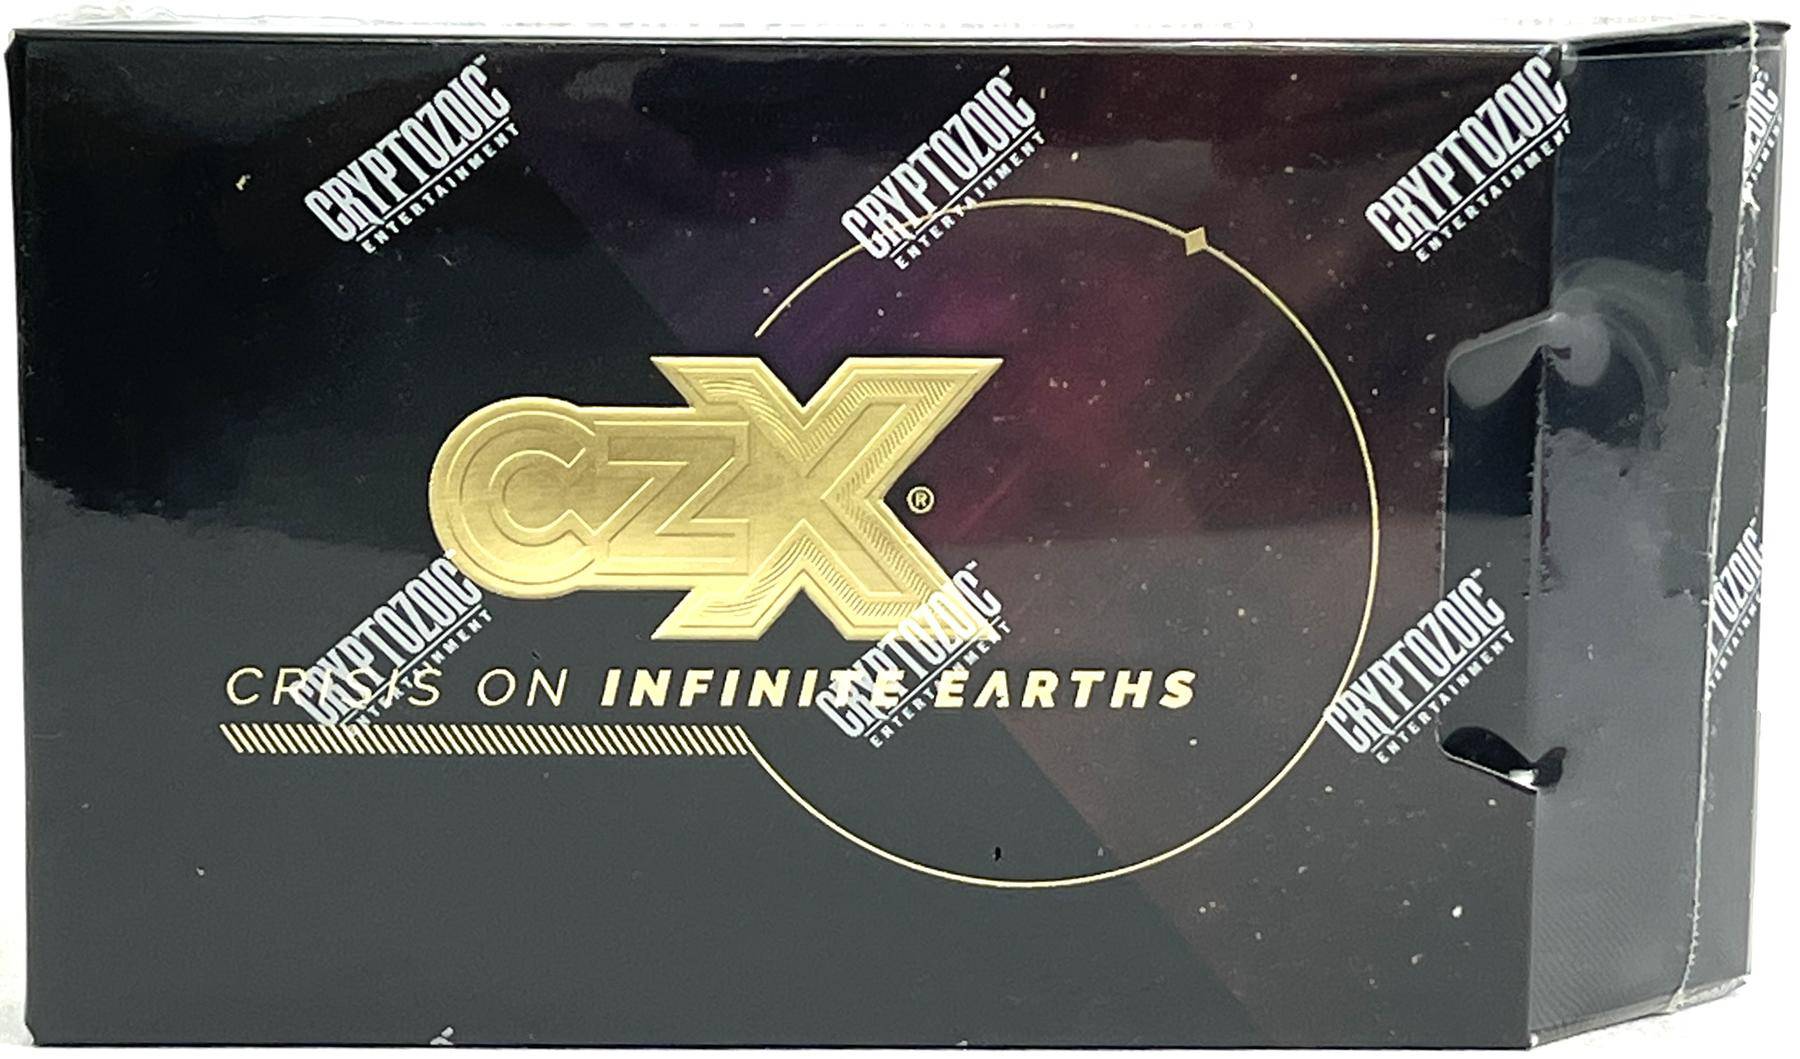 CZX Crisis On Infinite Earths - gabescaveccc